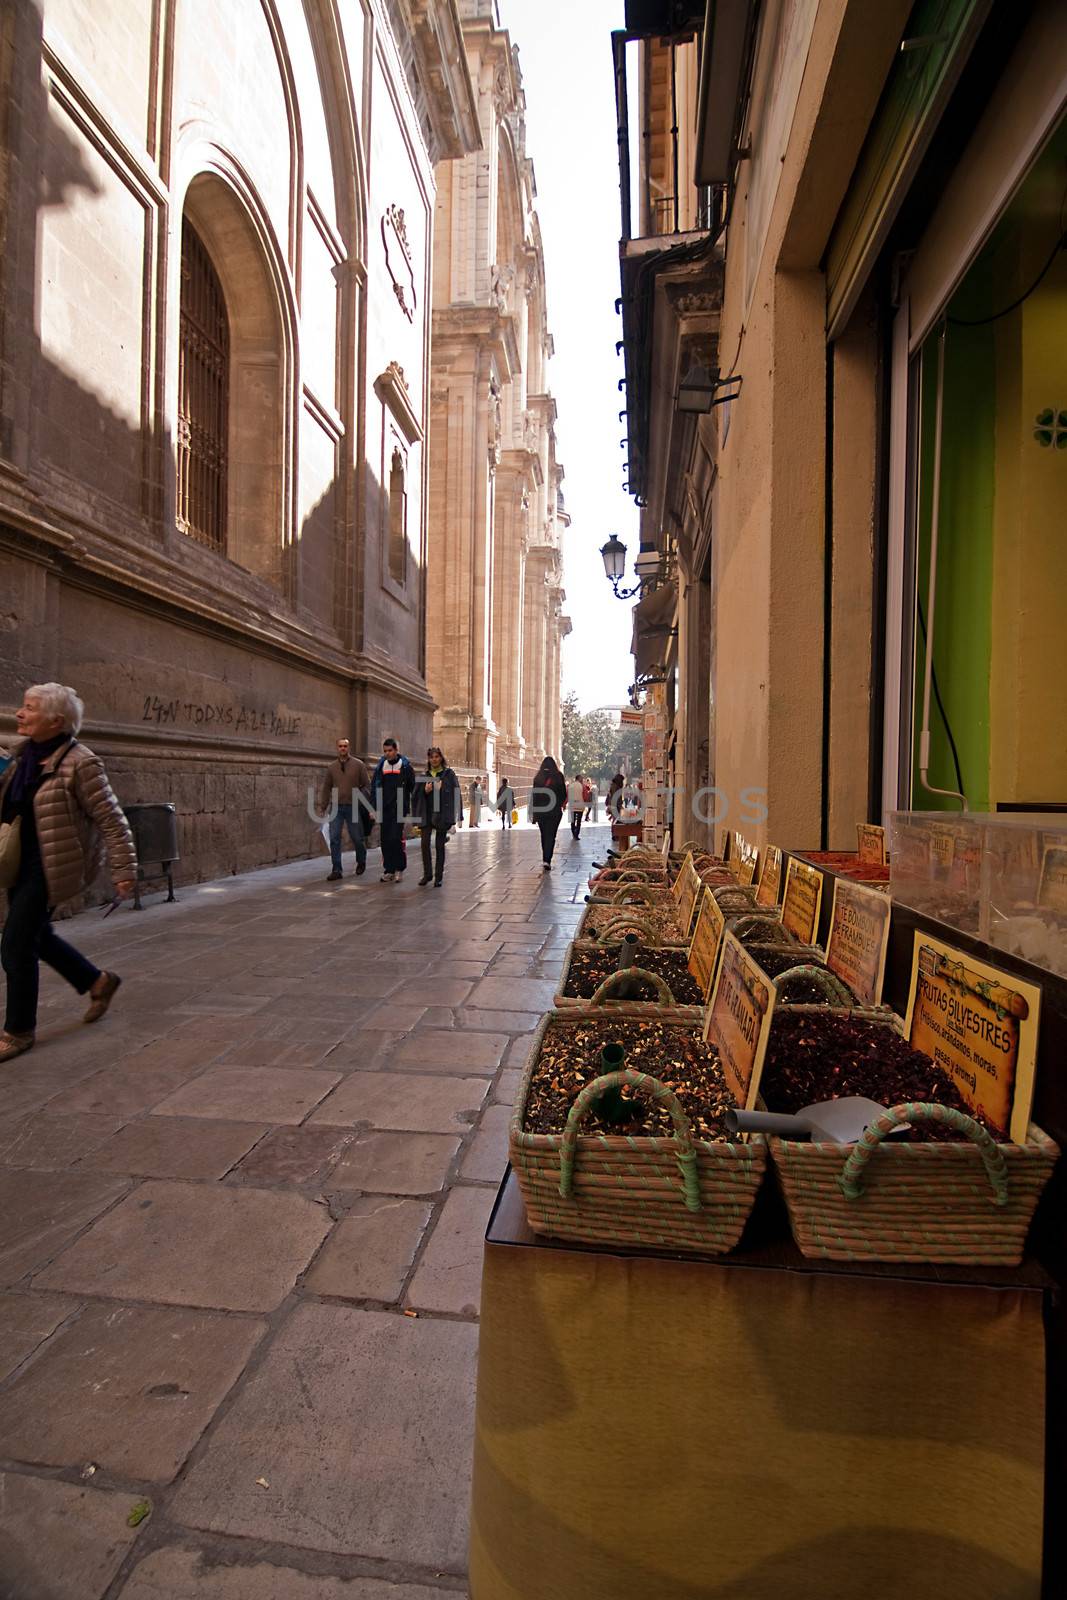 Market spices, Granada, Spain by digicomphoto